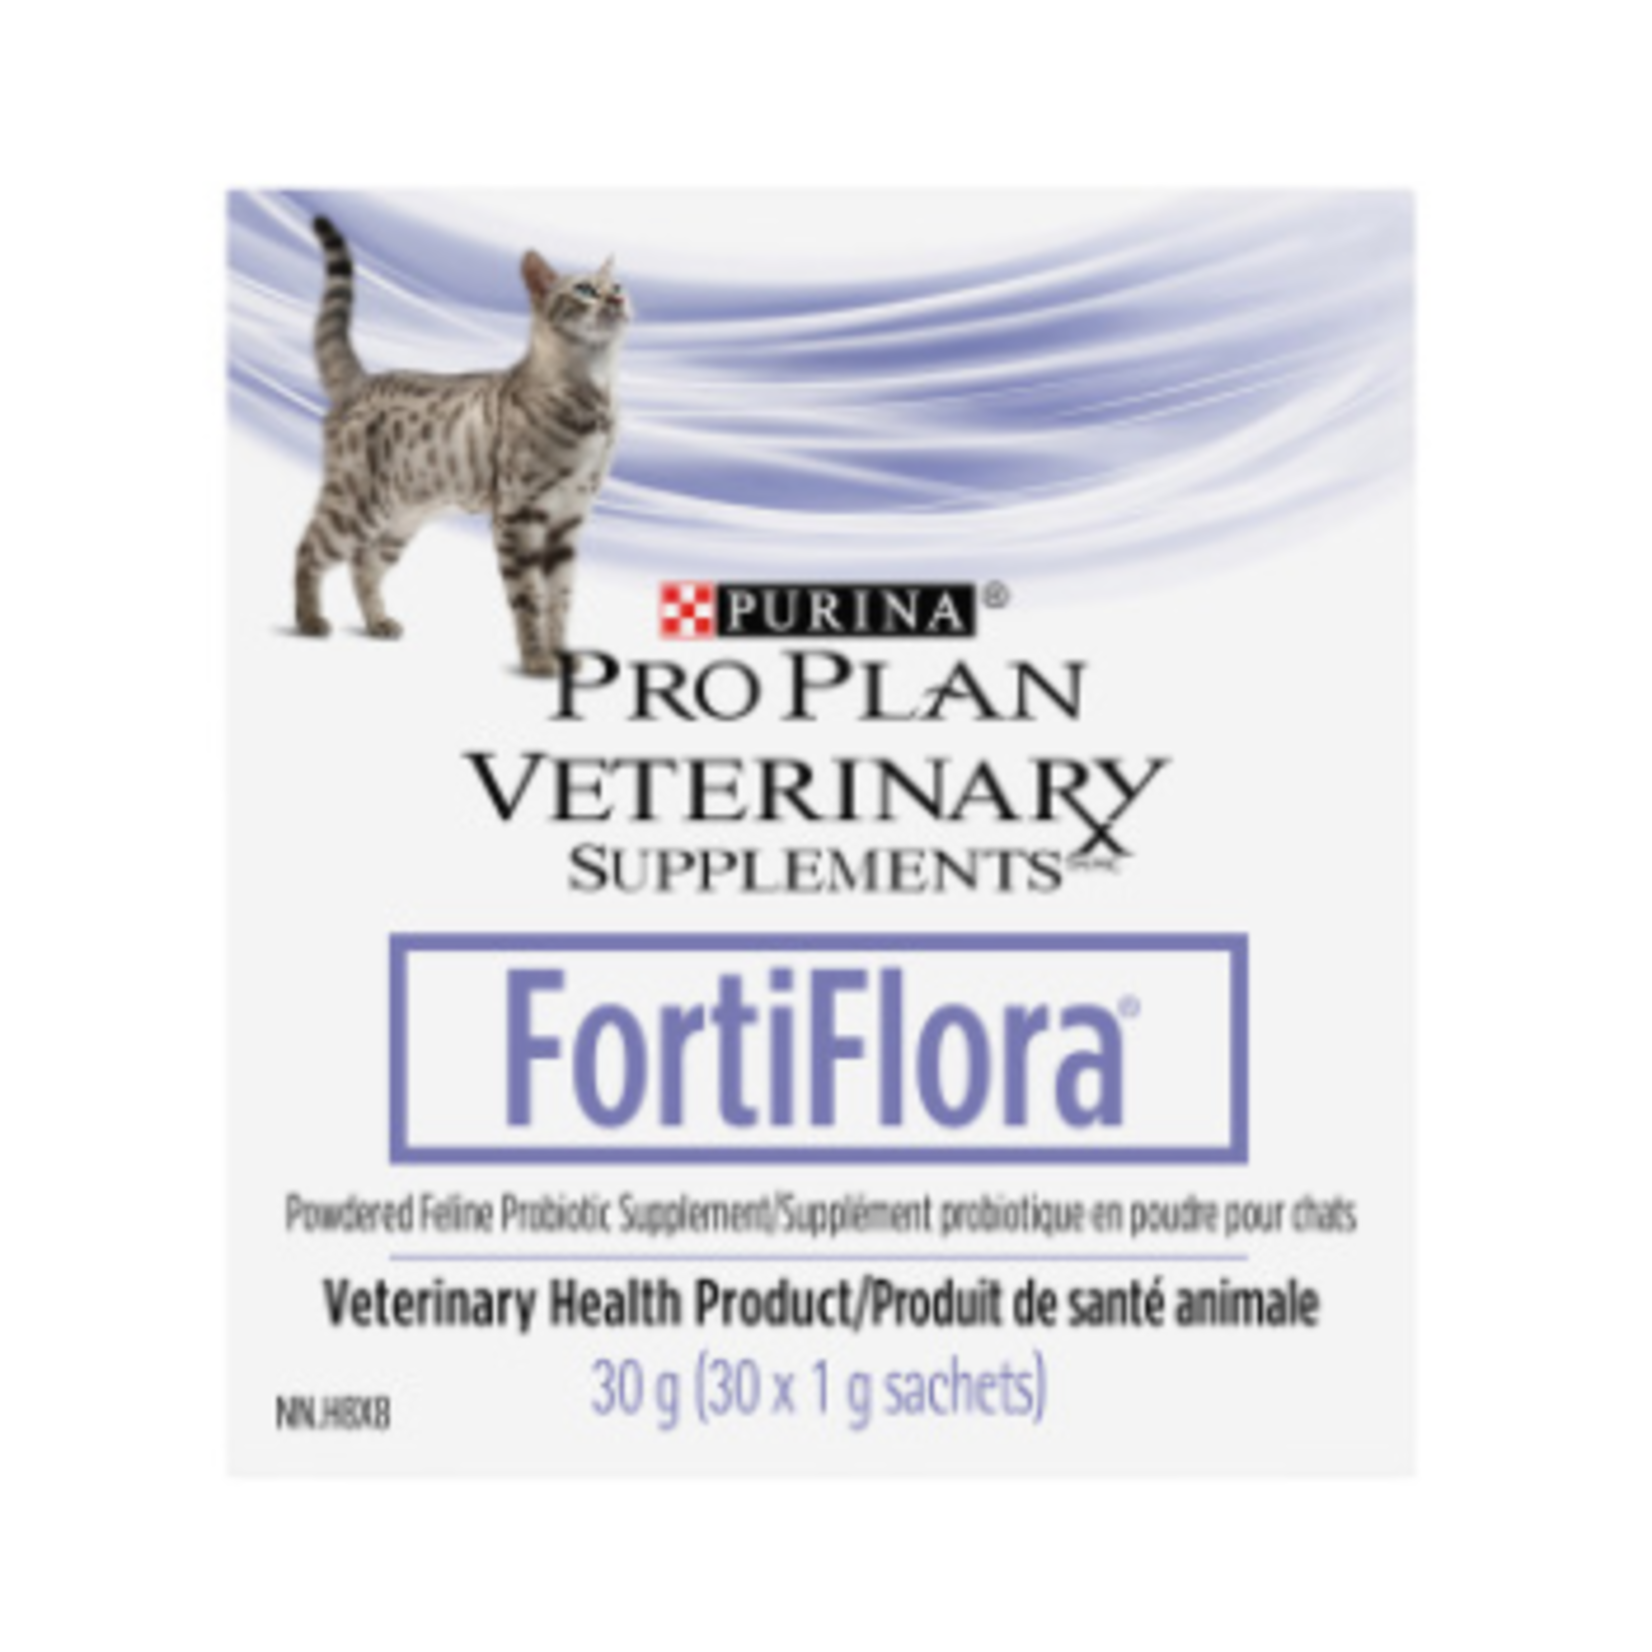 Purina Pro Plan - Fortiflora supplements - Cat - single bag